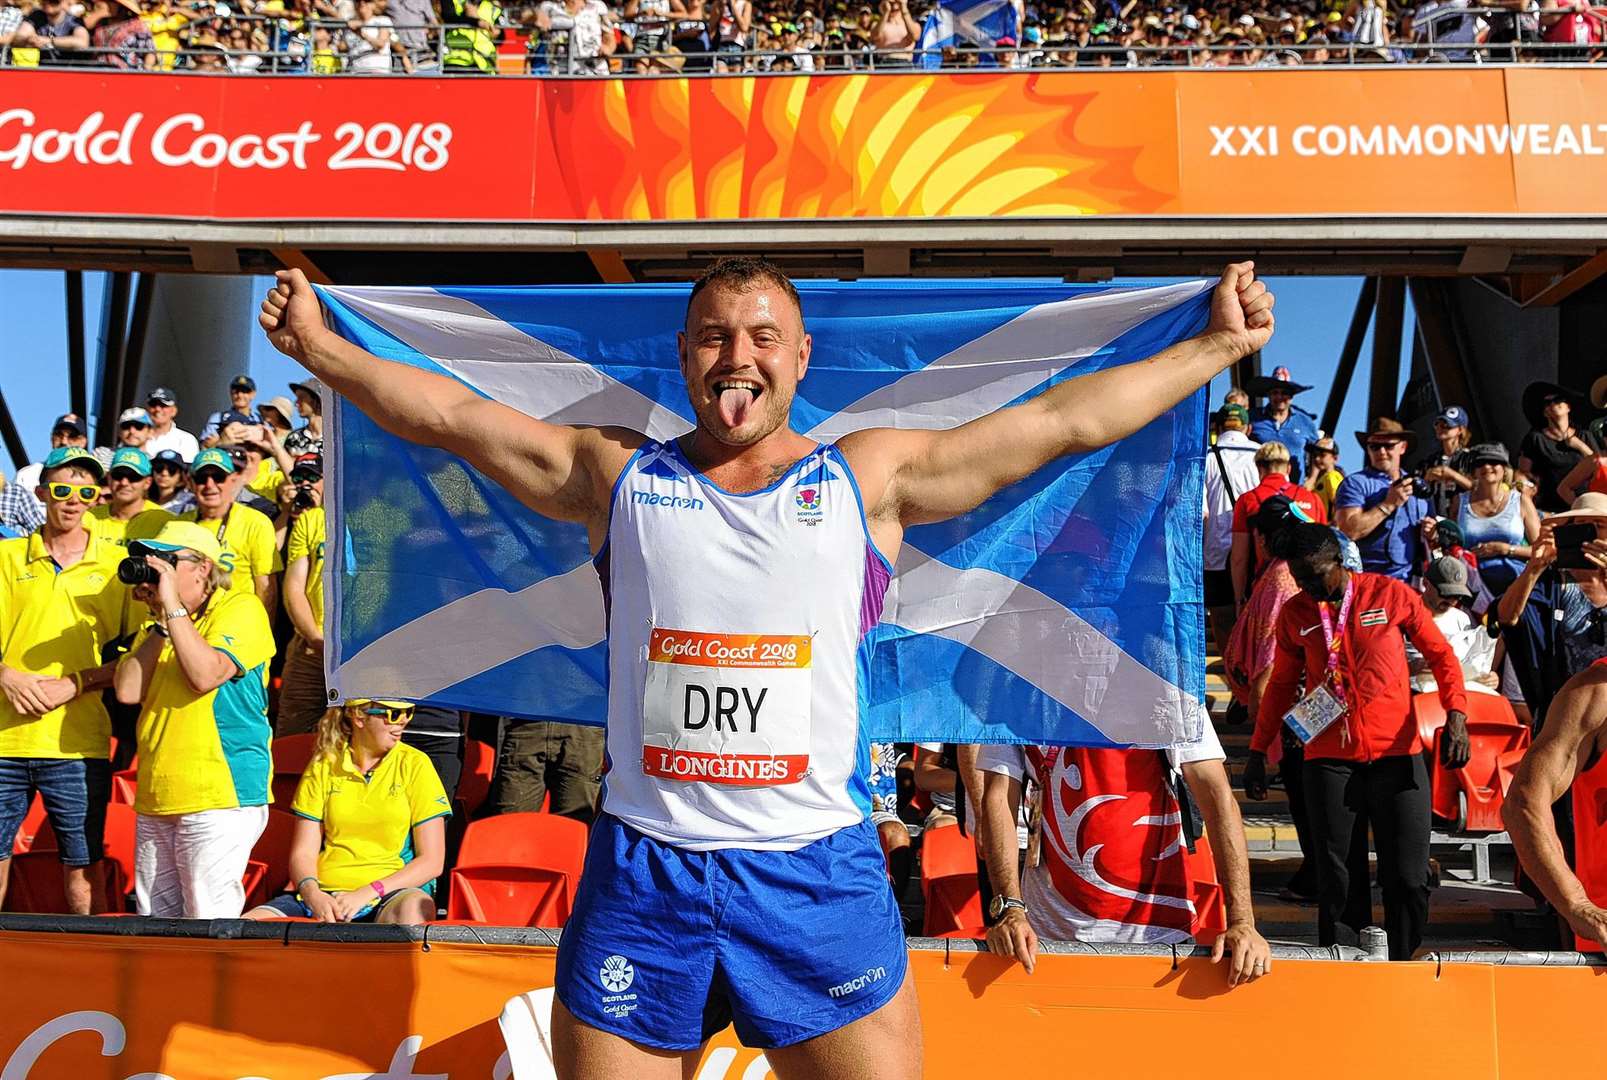 Mark Dry won bronze at the last Commonwealth Games in Australia's Gold Coast. Photo: Mark Stearman